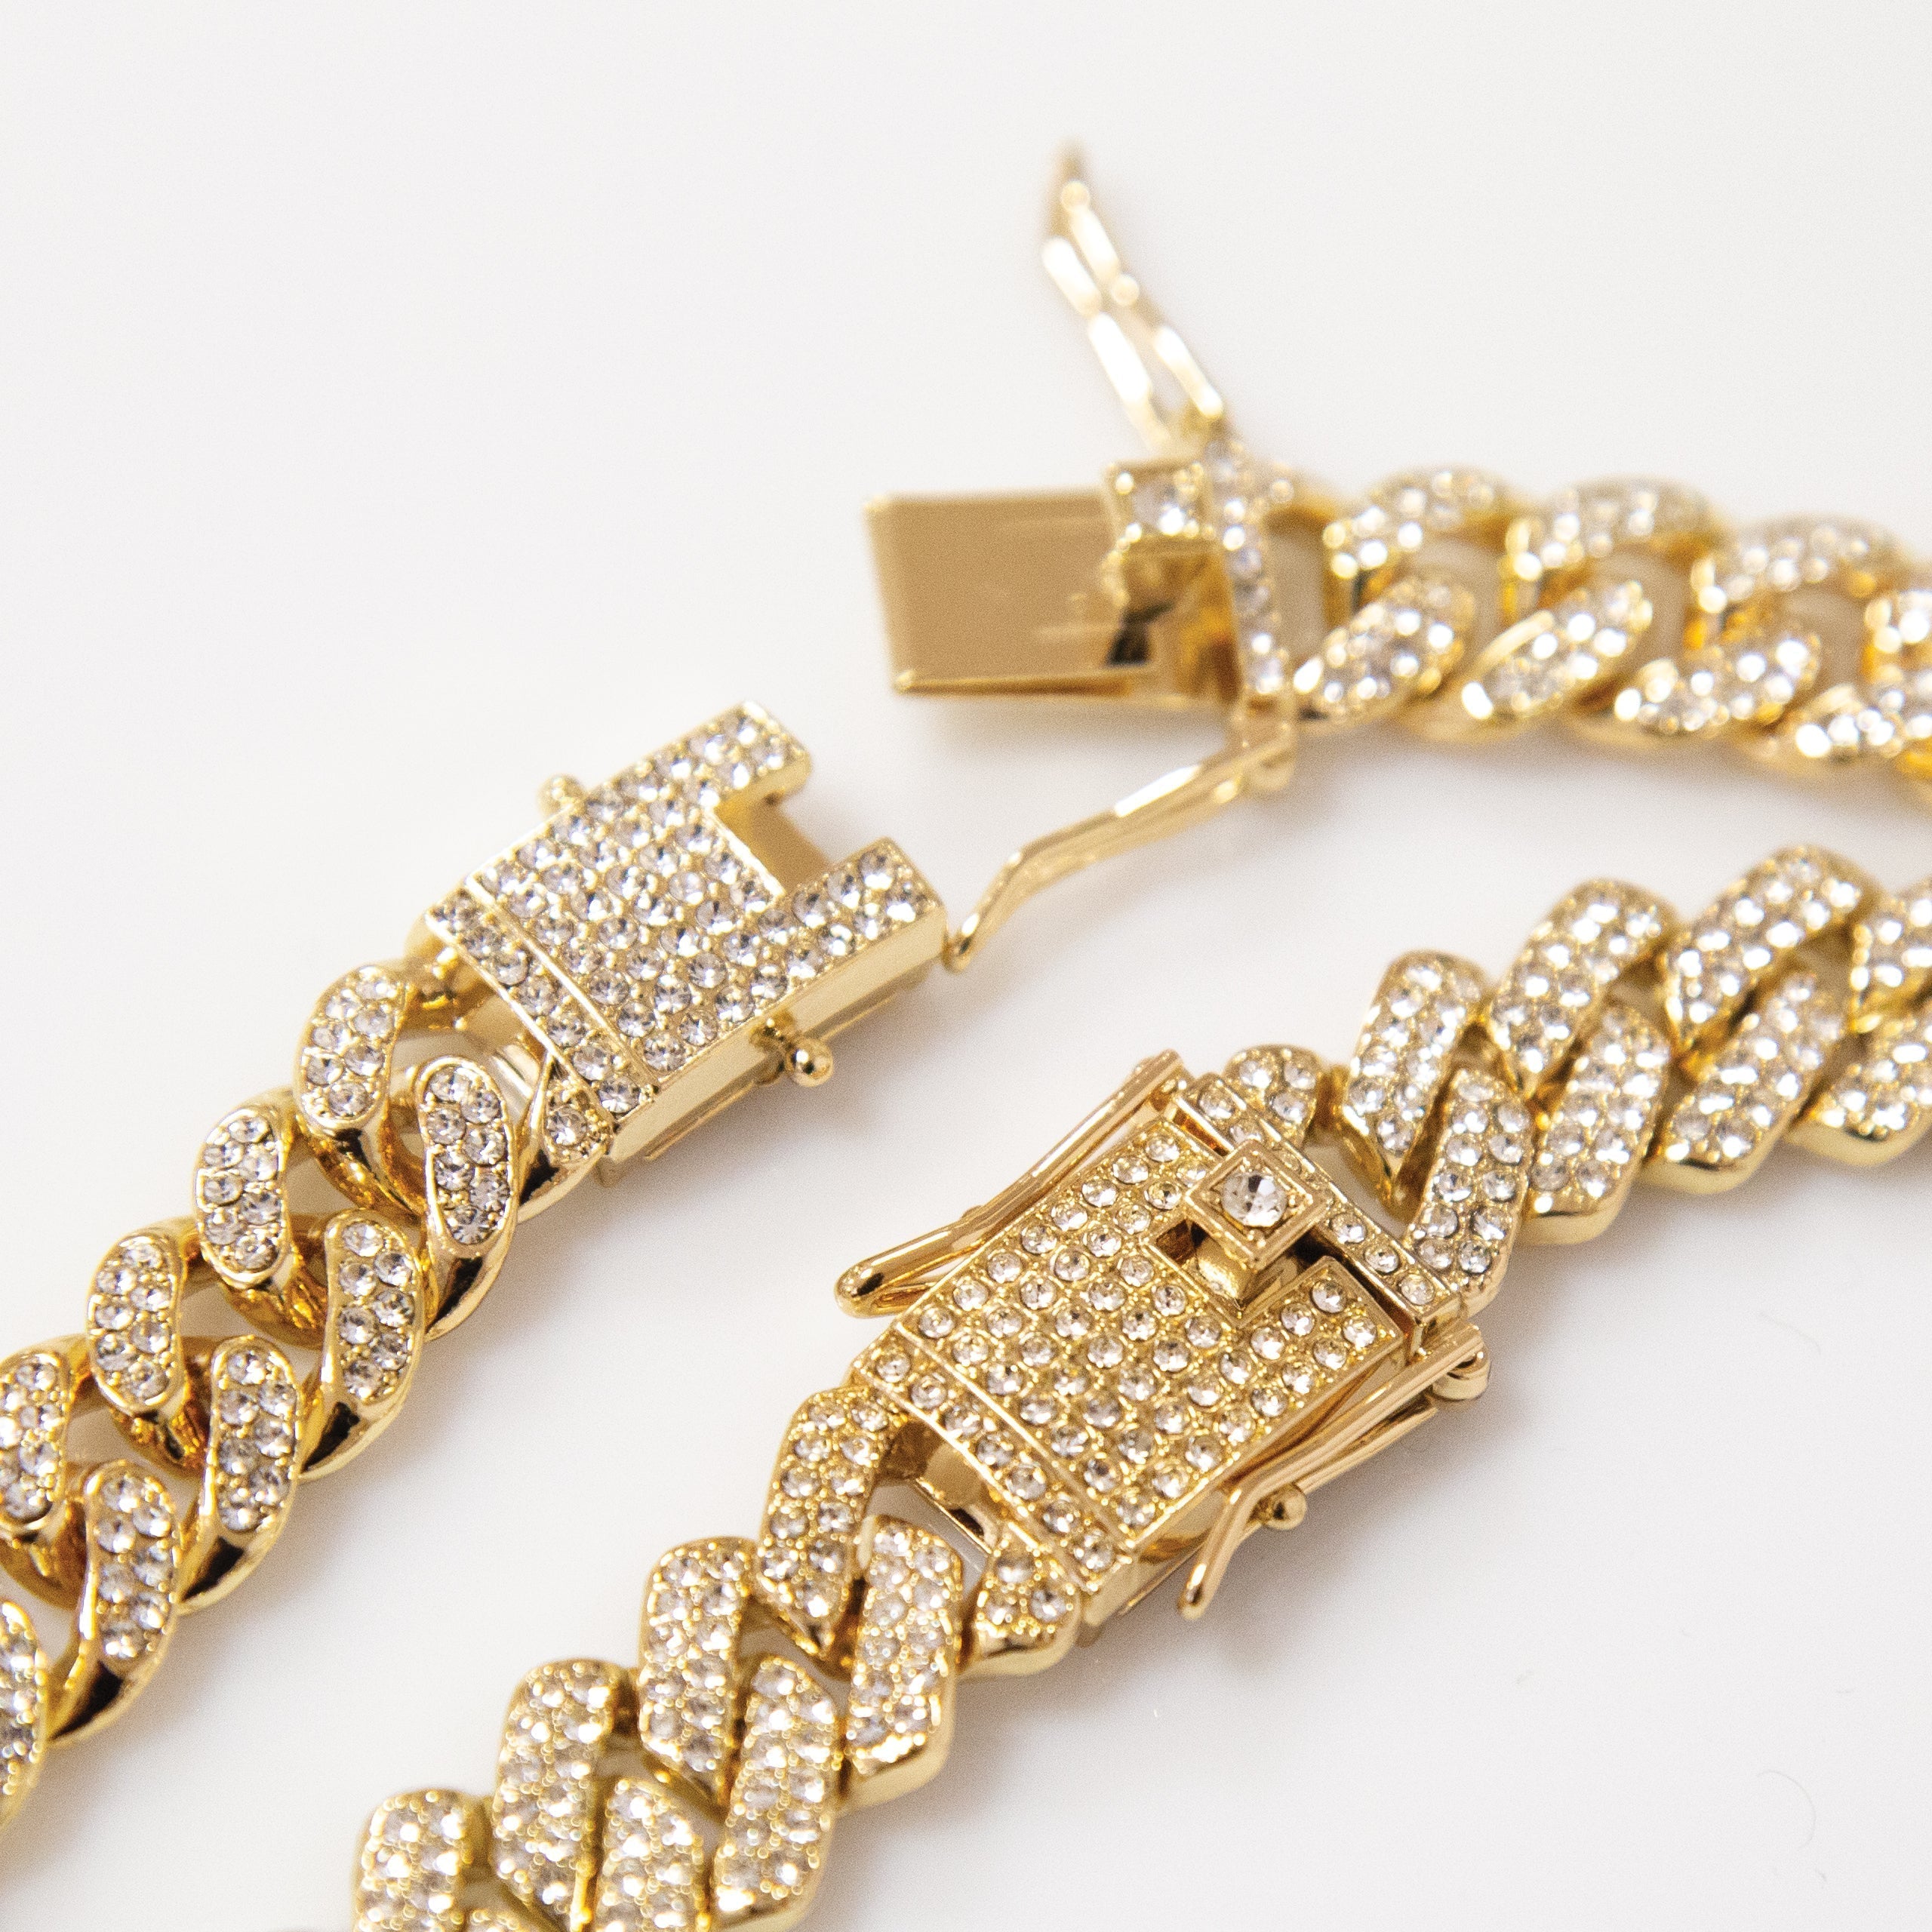 Cuban Chain Necklace & Bracelet Counter Top Silver